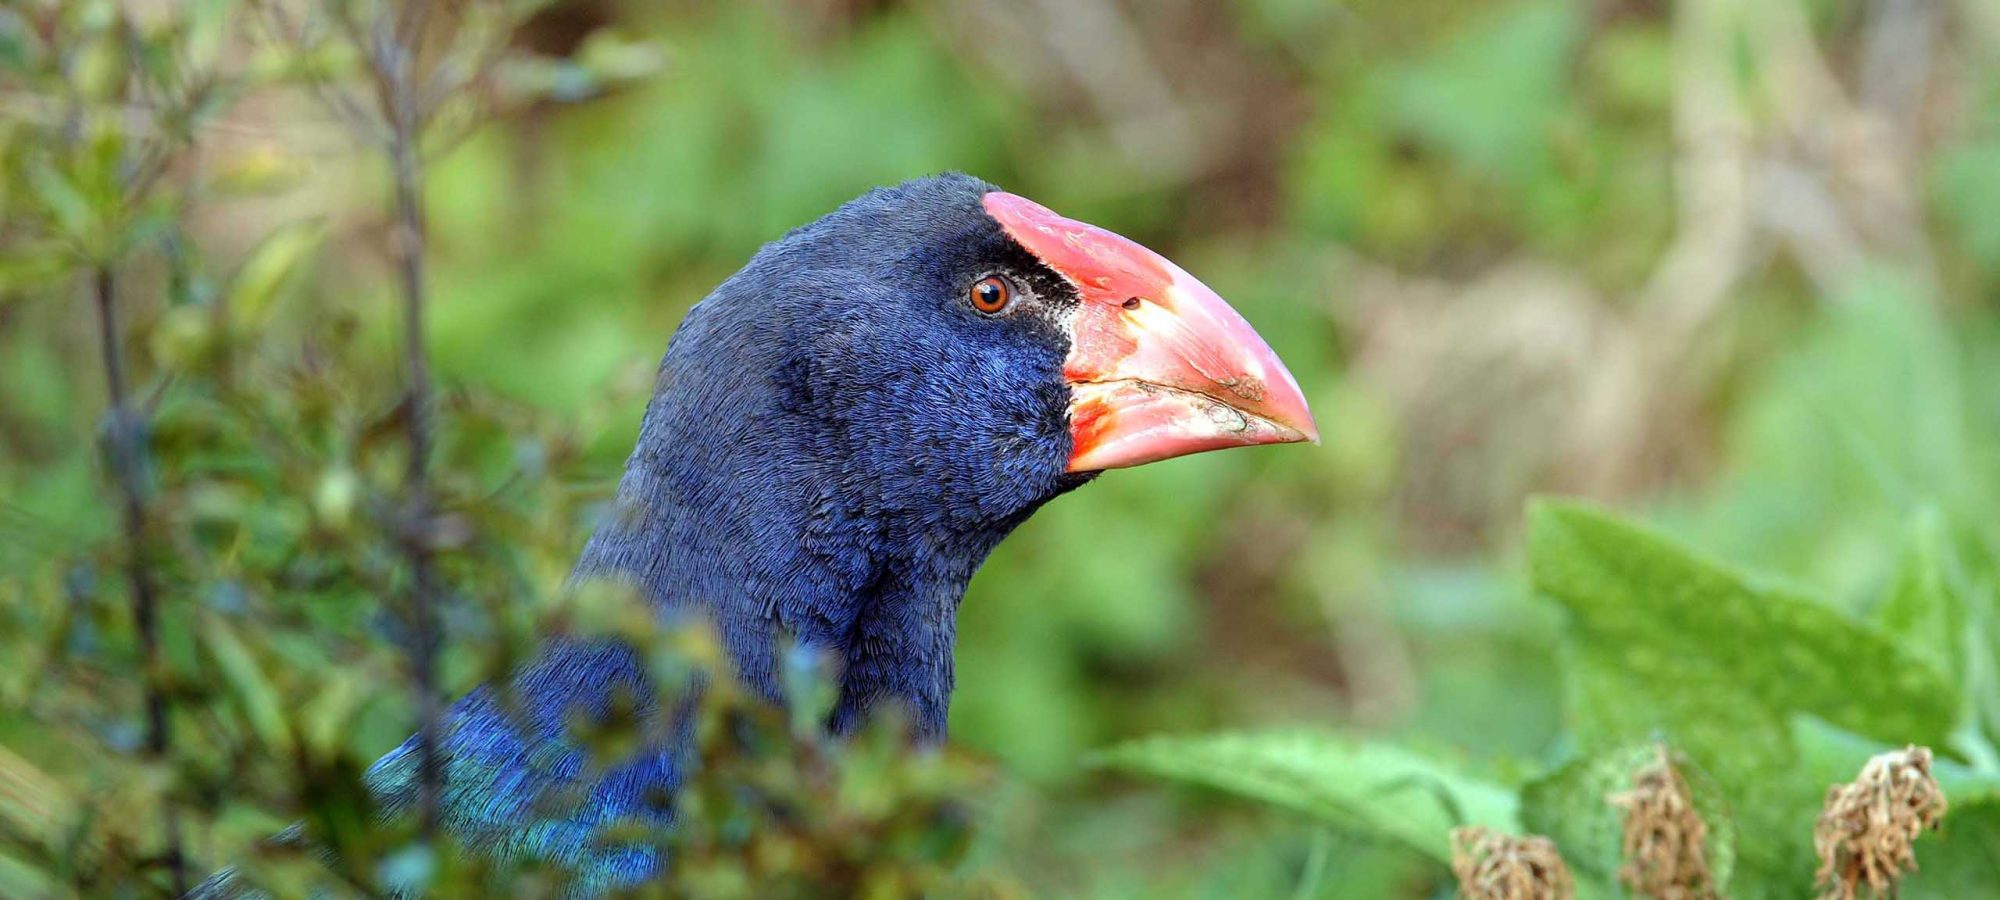 Region-Dunedin-Eco-Sanctuary-Takahe-Bird-Wildlife-Banner